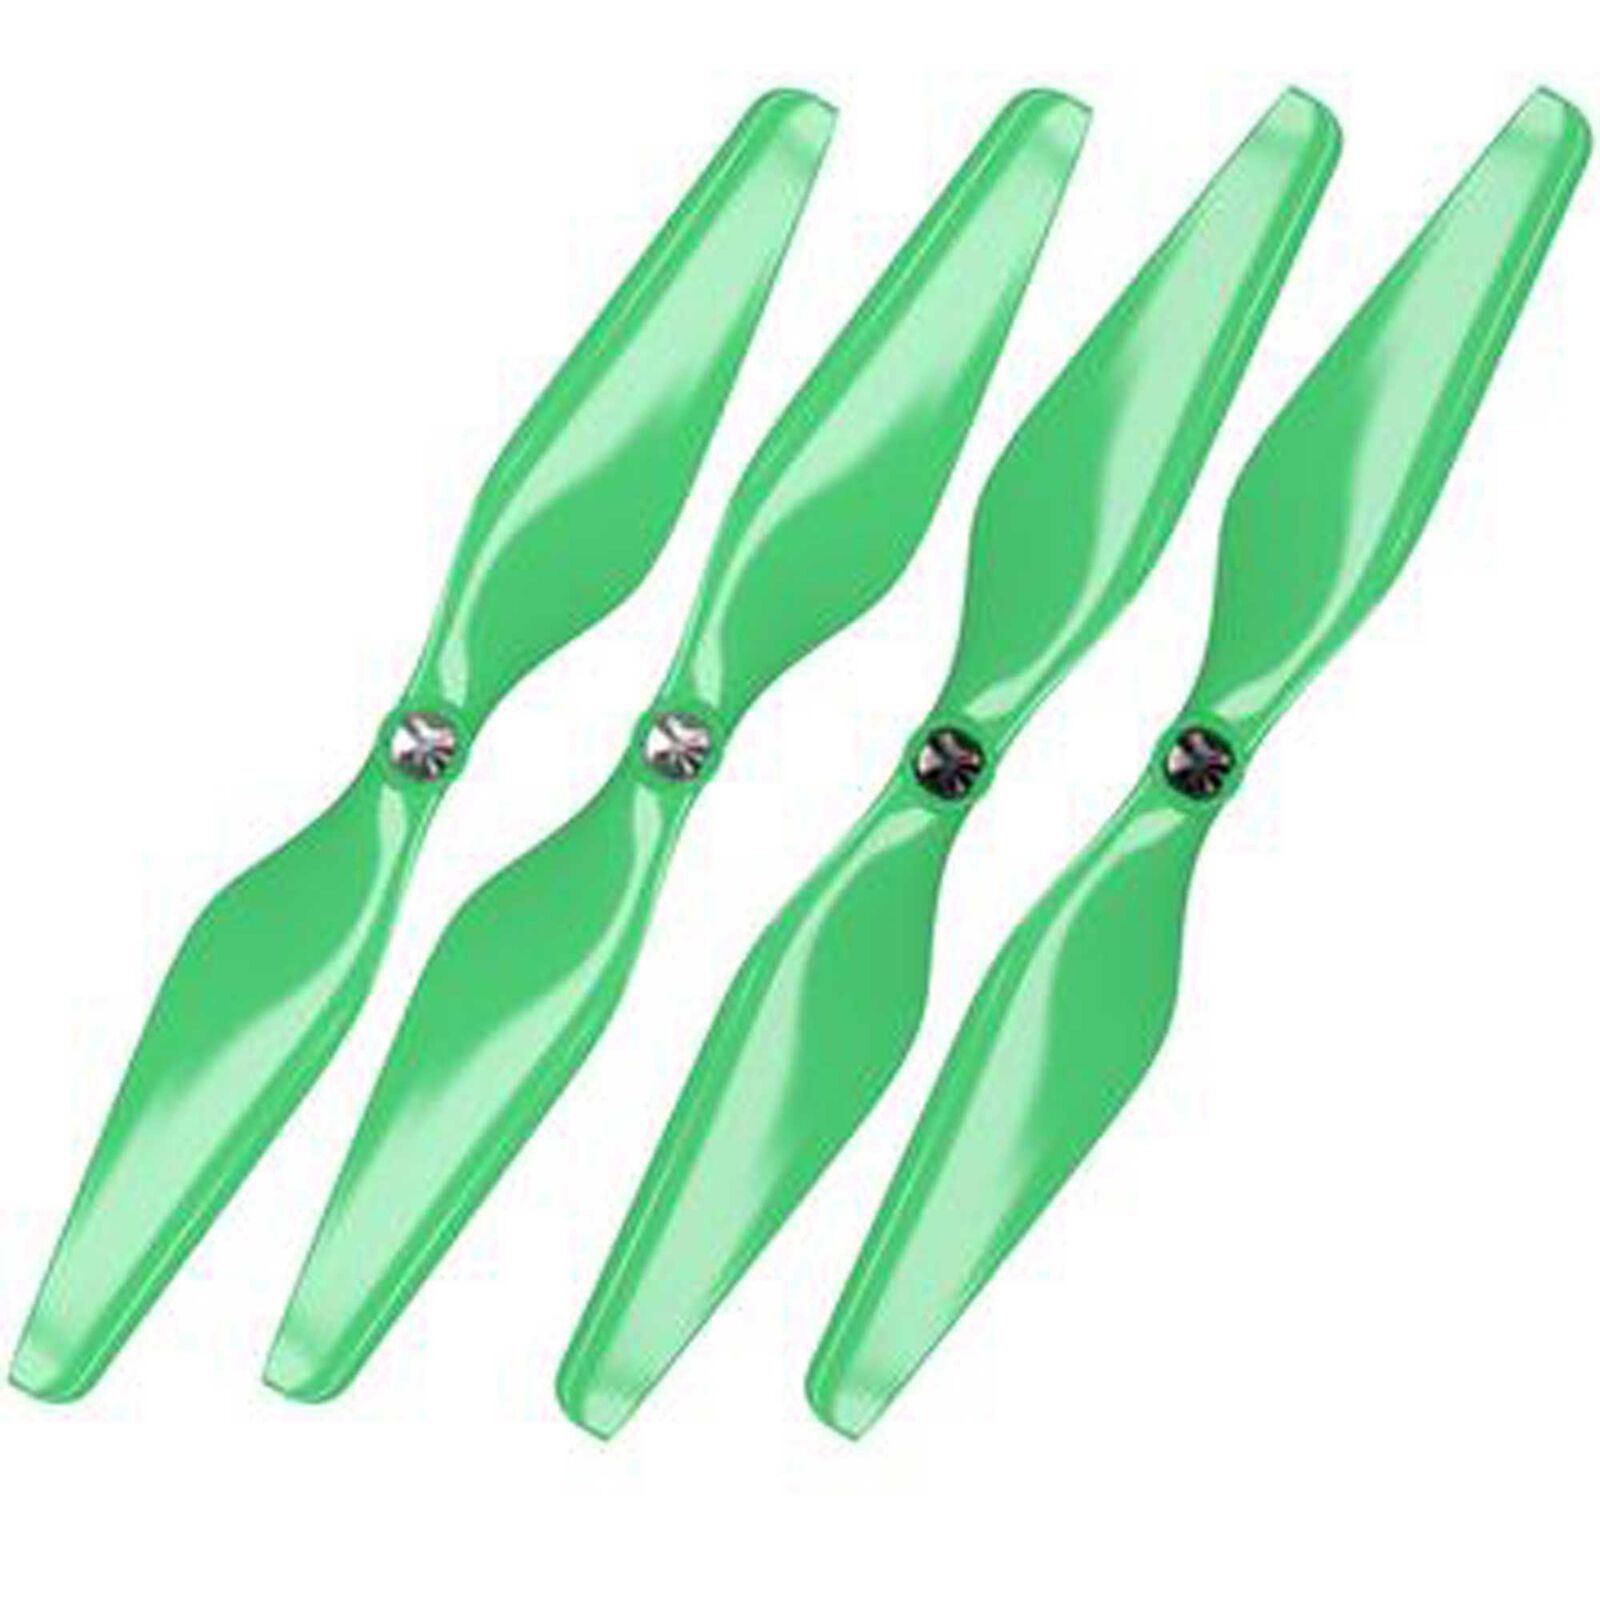 10 x 4.5 MR-SL Propeller Set C, Green (4): 3DR SOLO